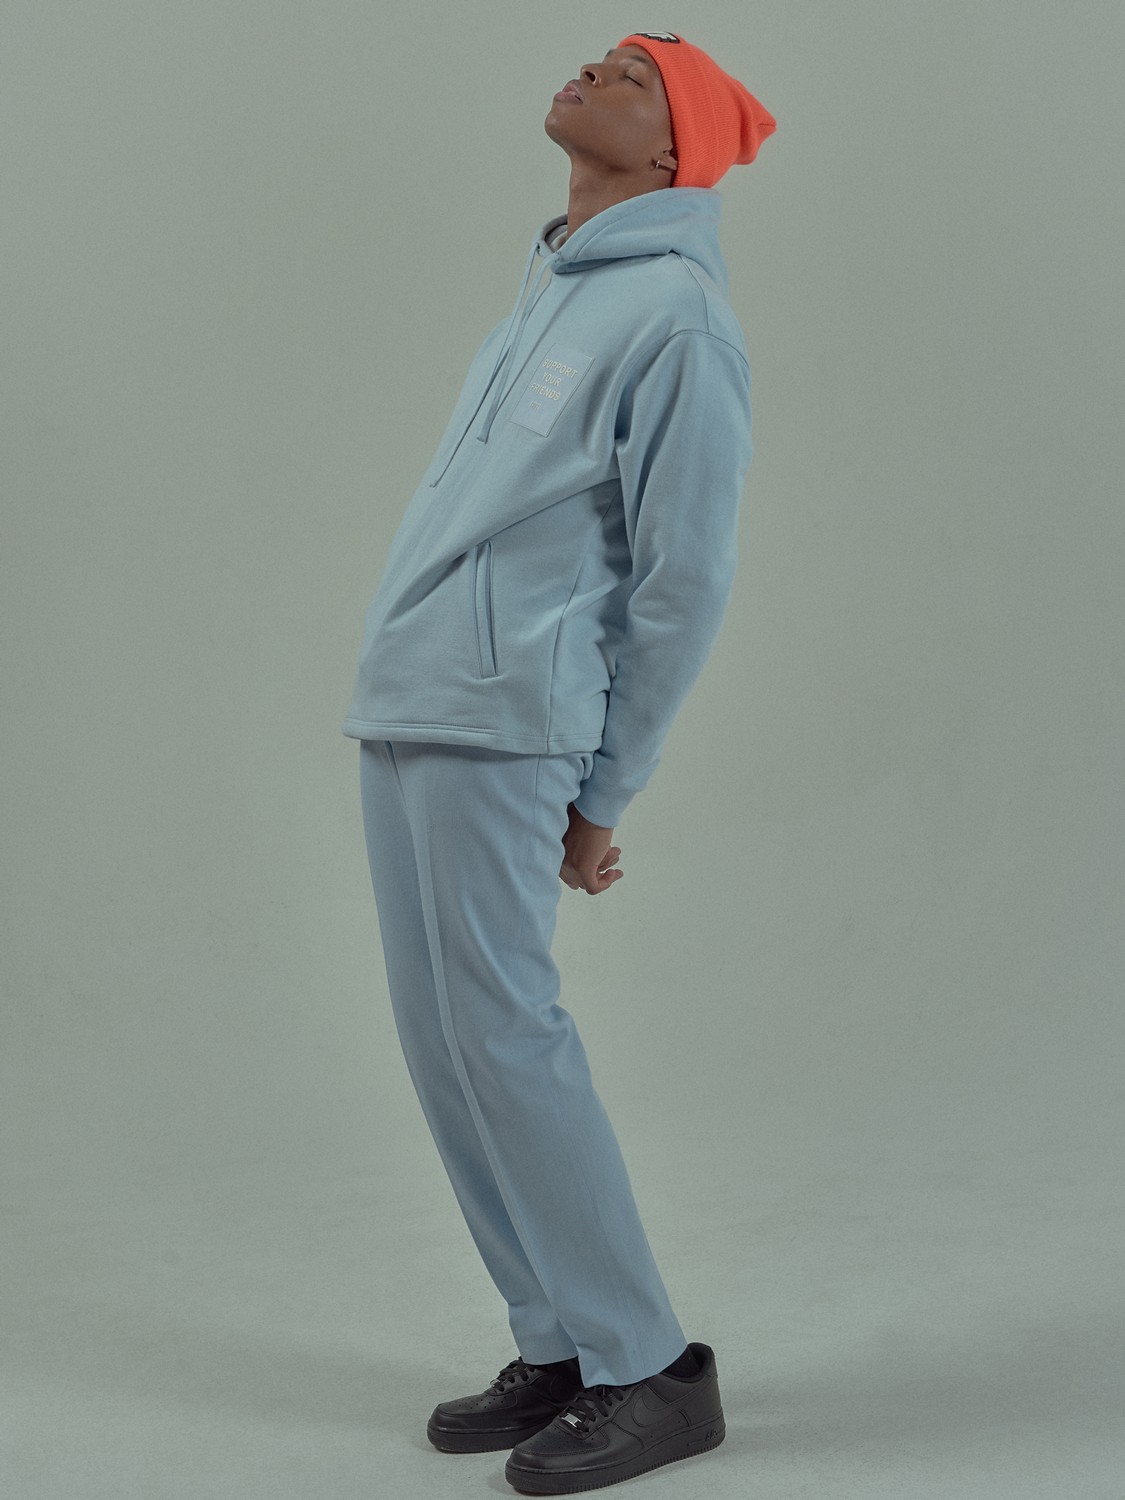 krost-back-school-blazer-pajama-pants-june-2019 (4)